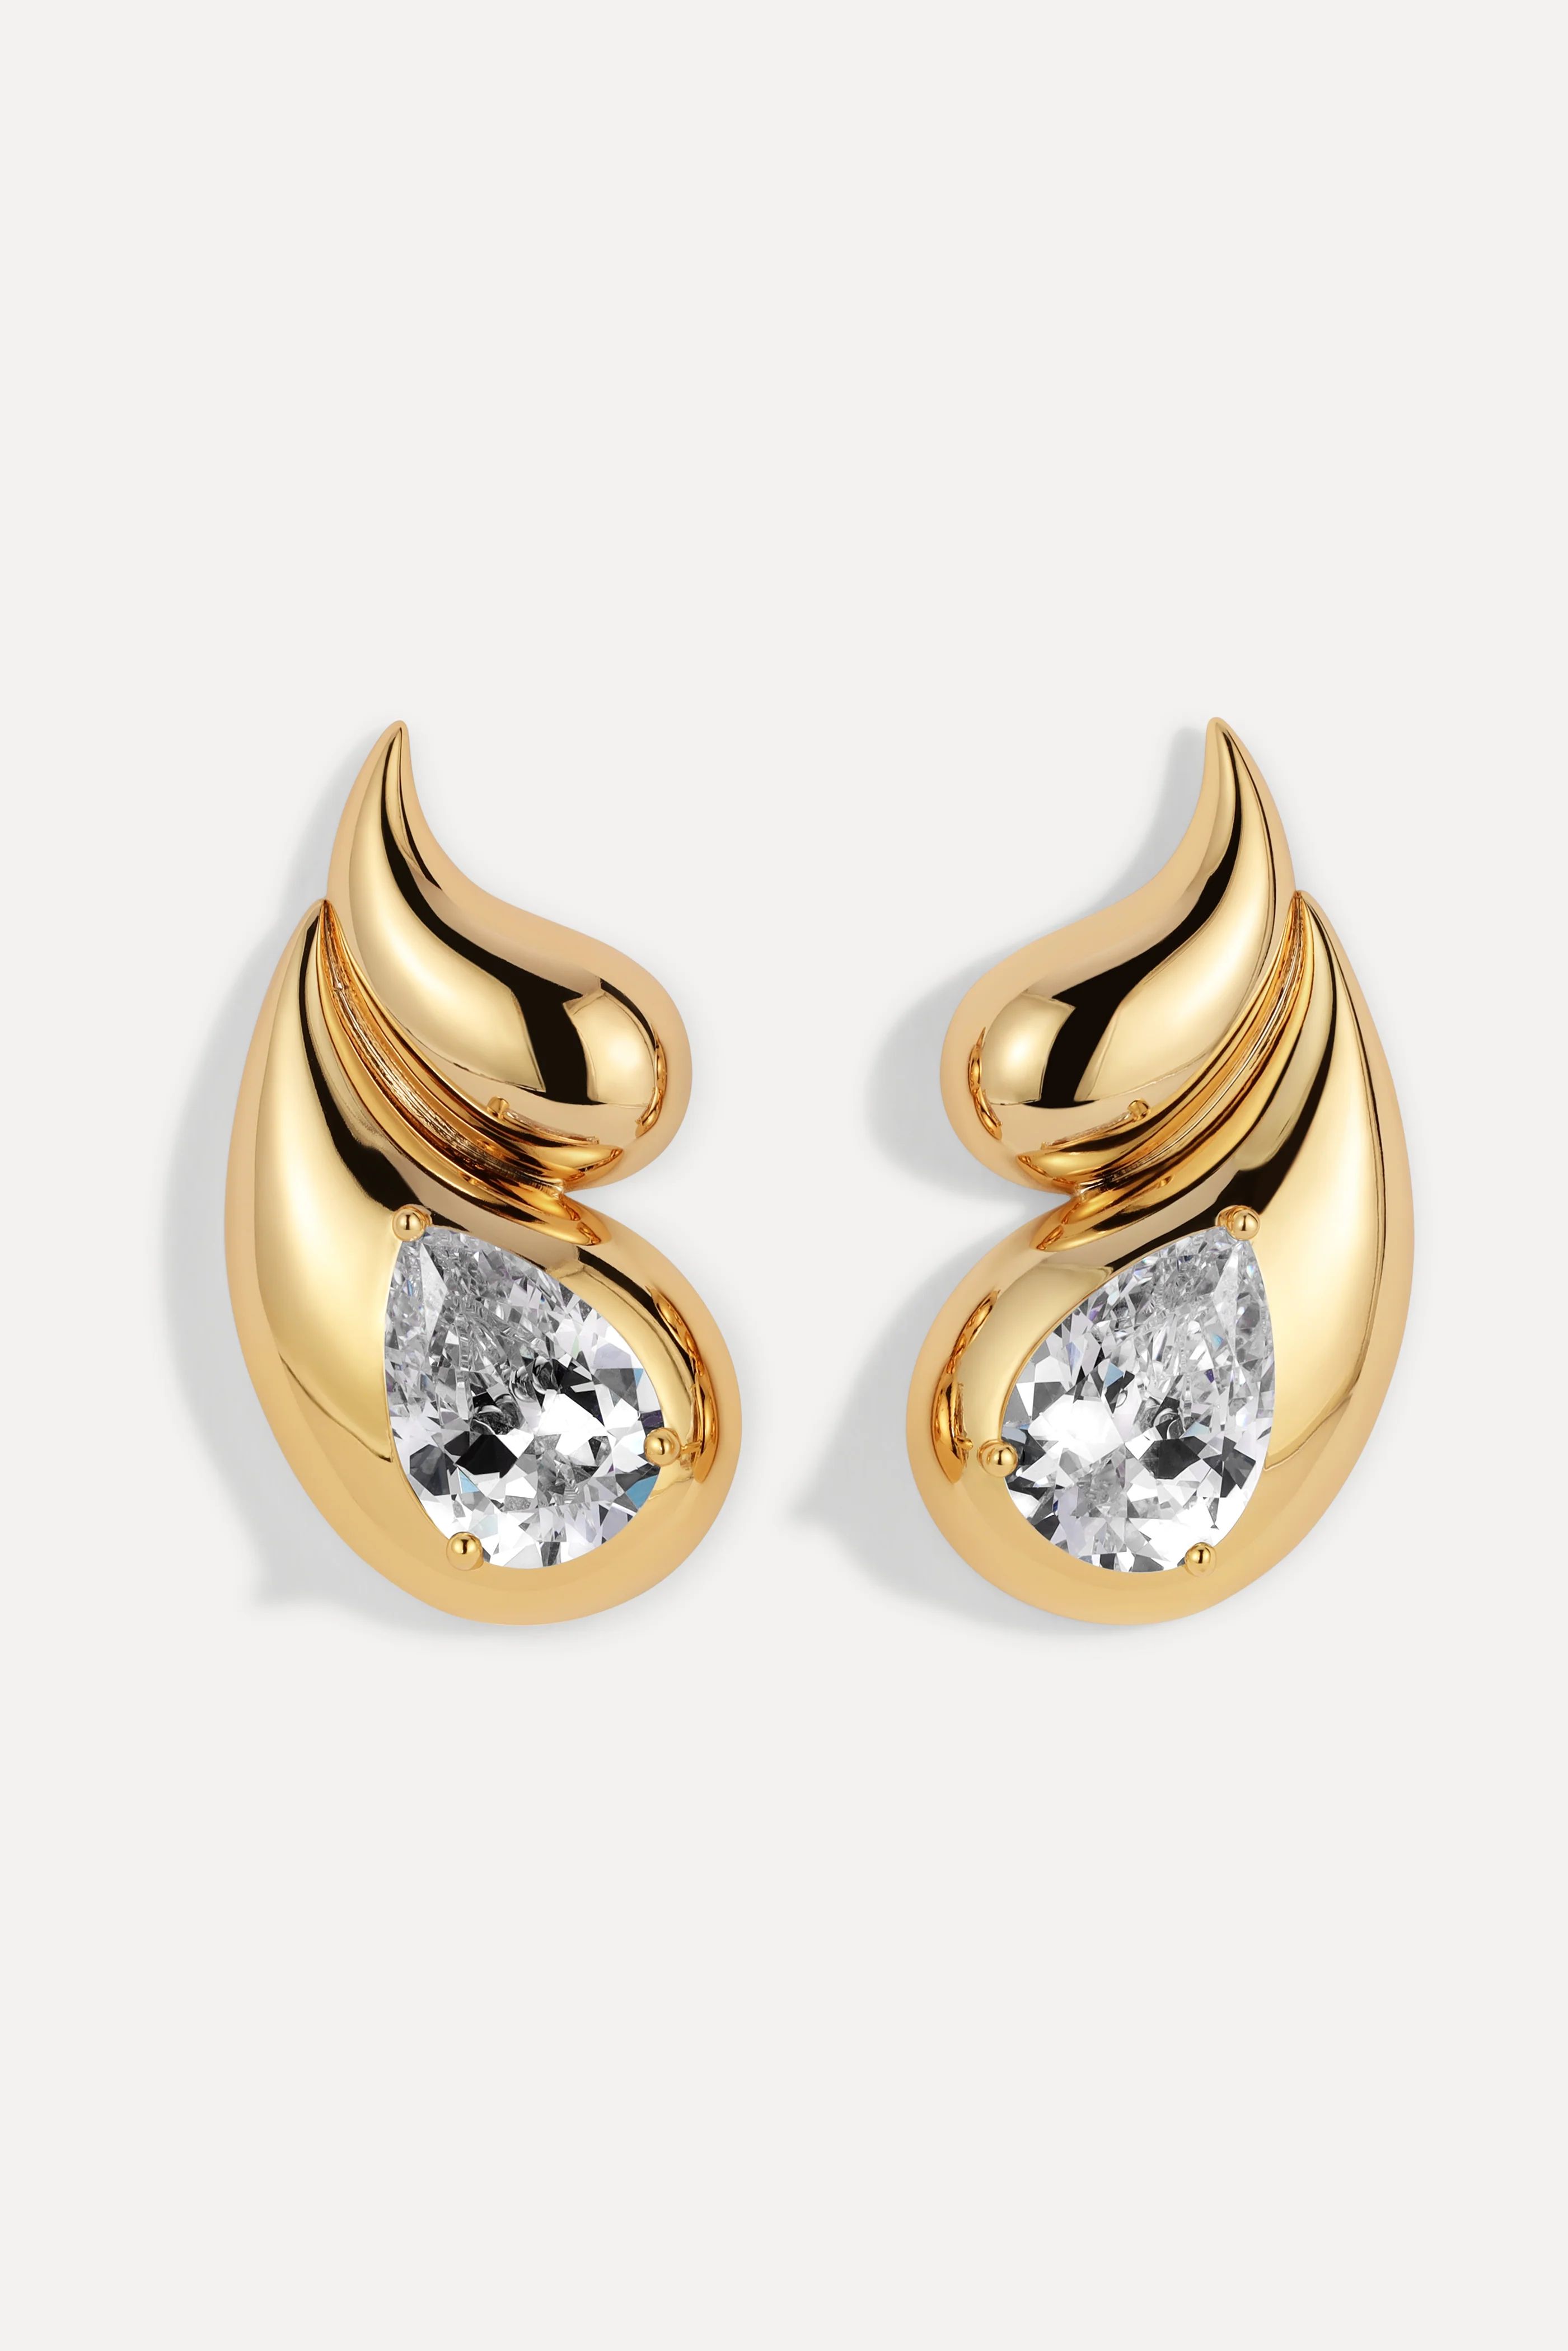 White Cz Sade Earrings | Lili Claspe